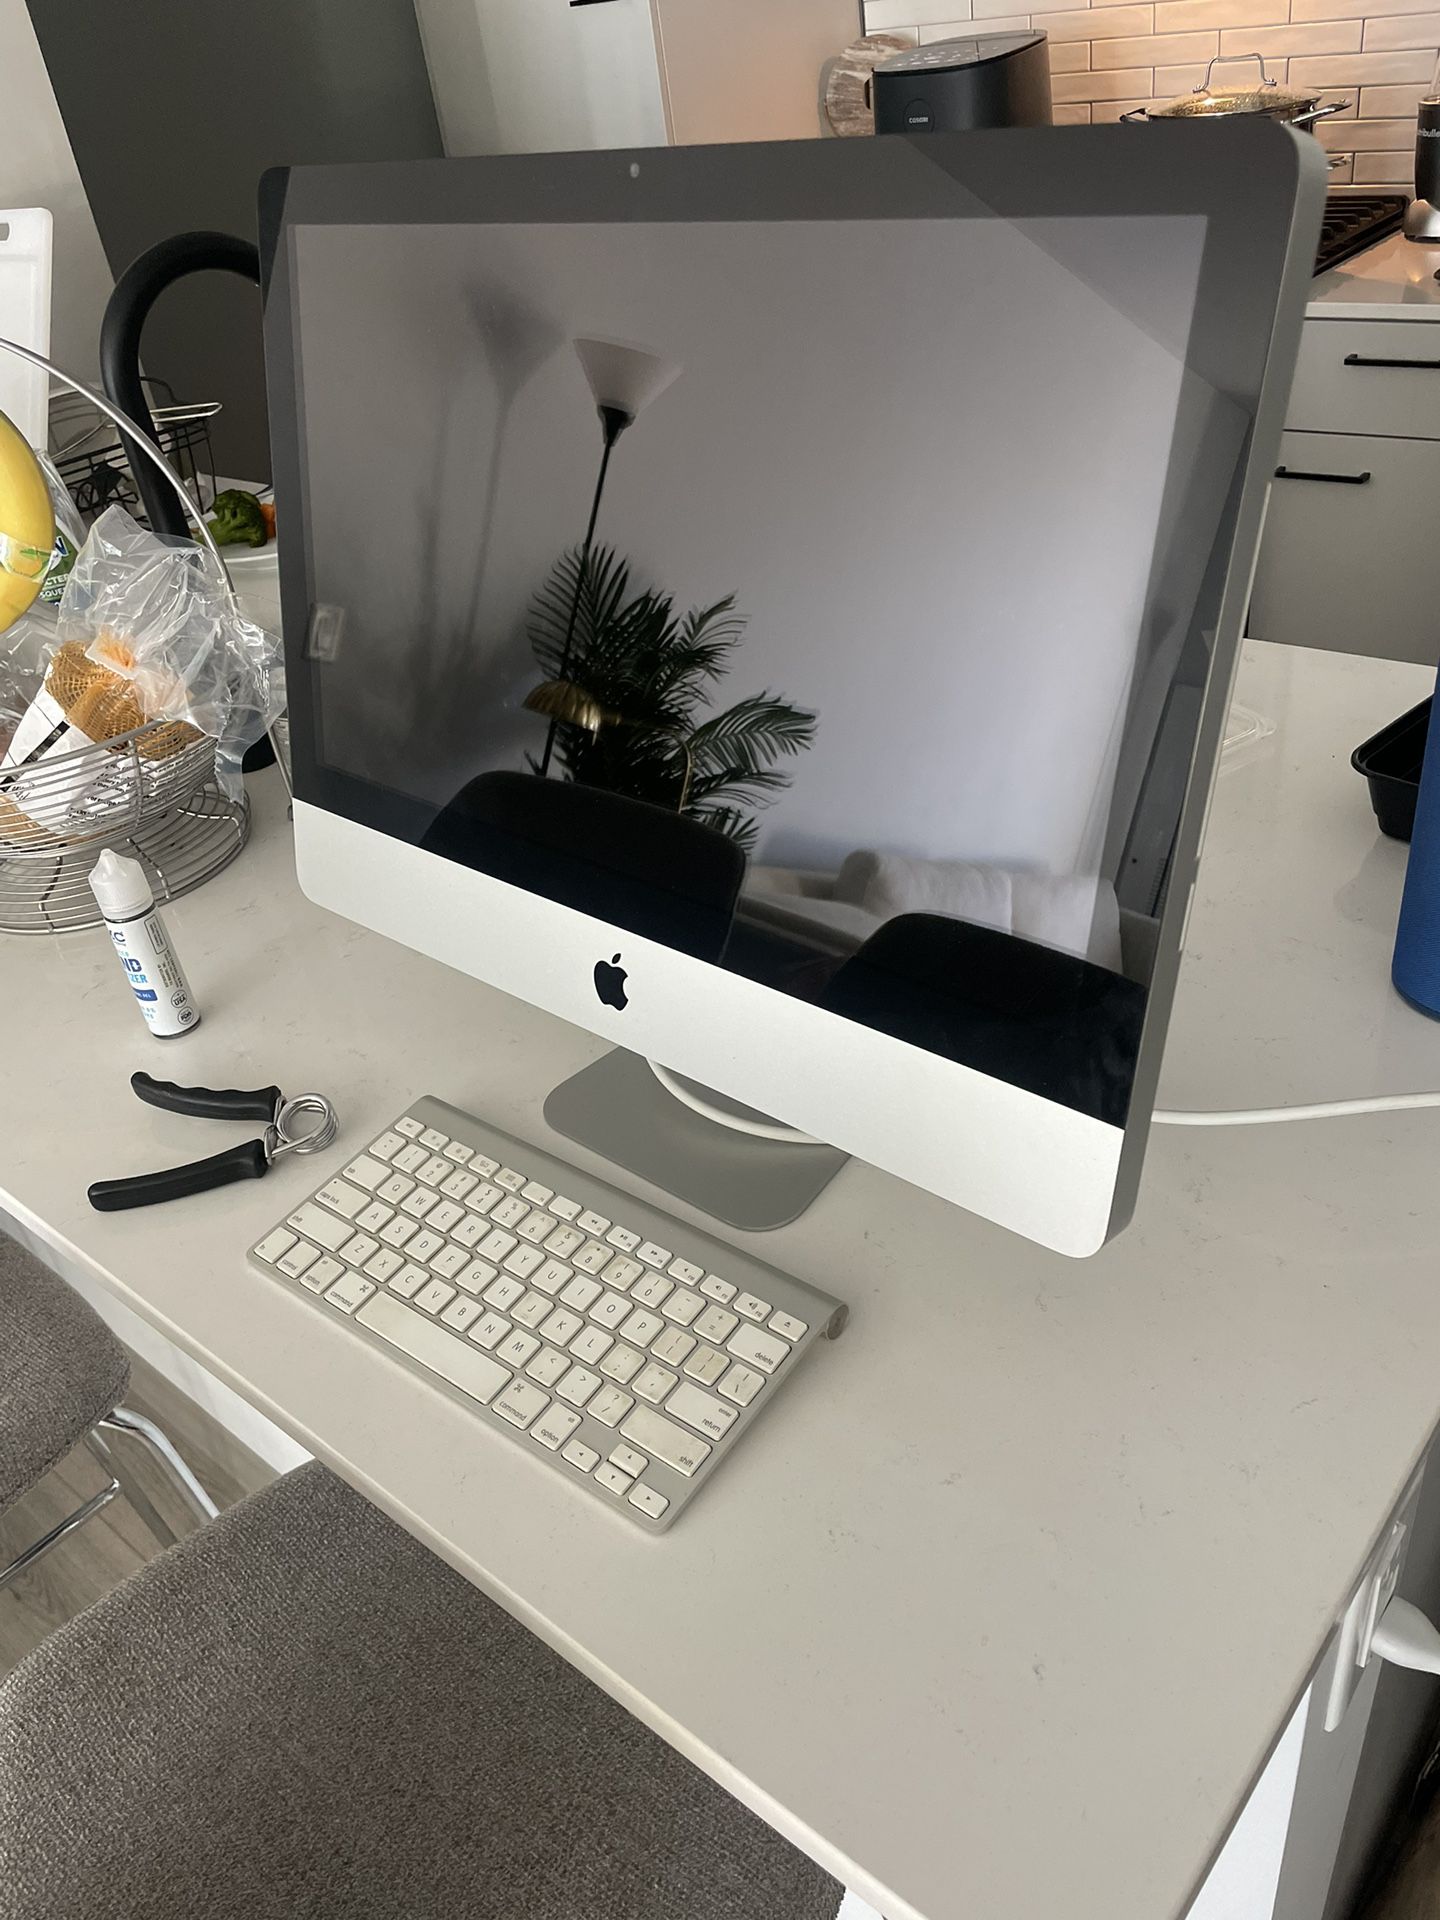 Mac Desktop Computer